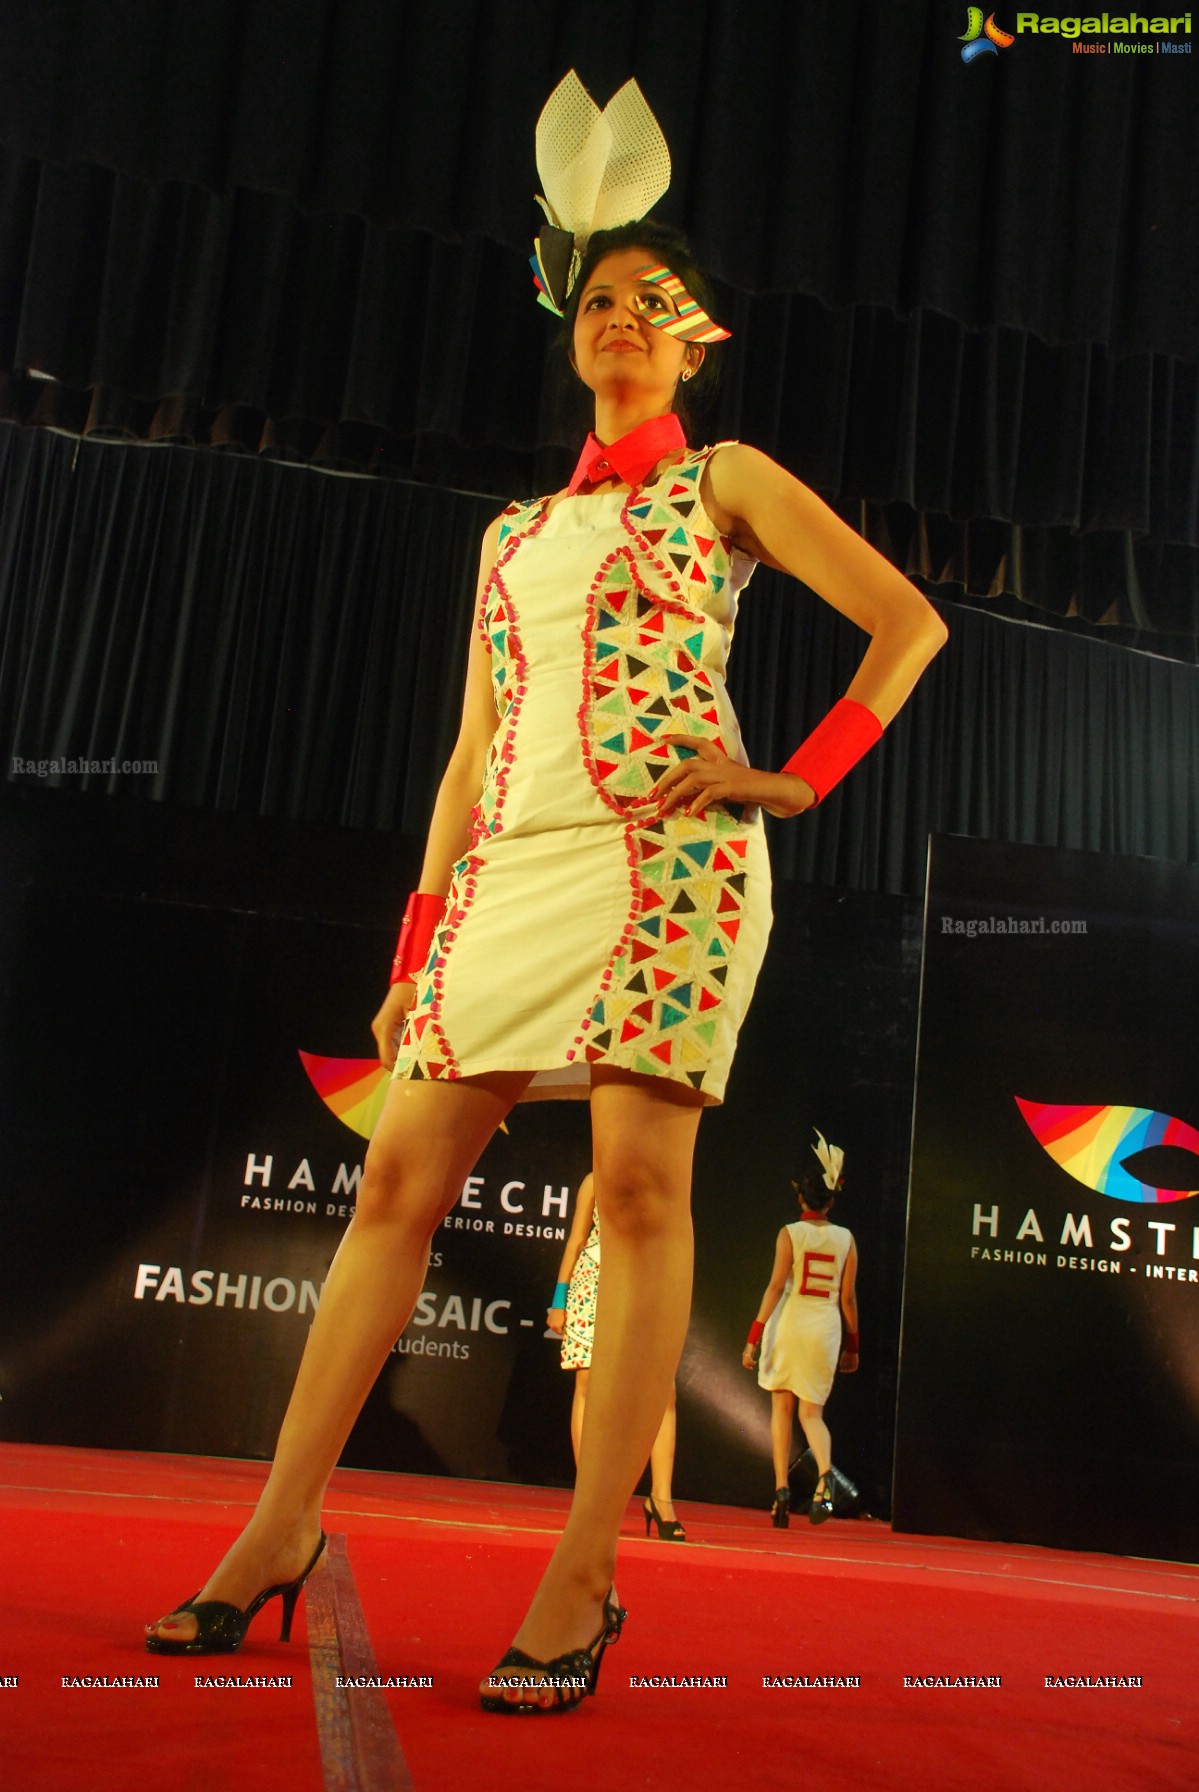 Hamstech Fashion Mosaic 2014